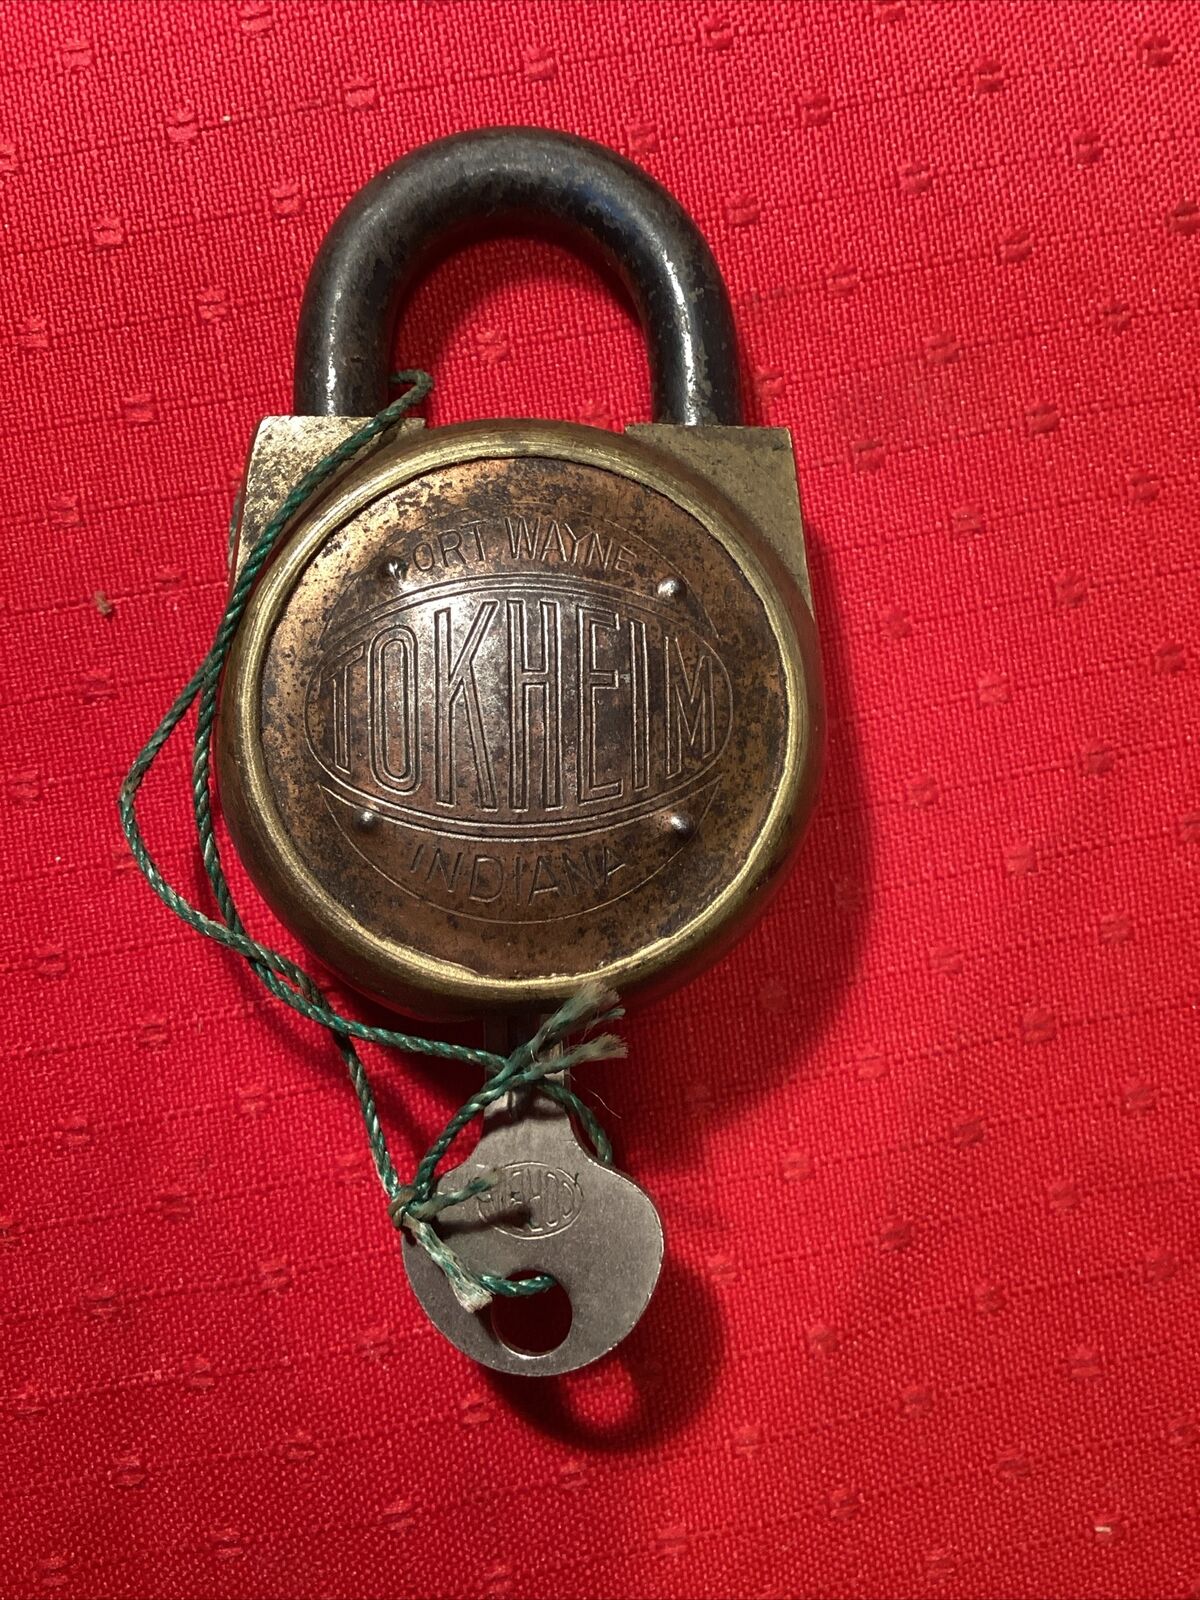 Vintage Tokheim Padlock Fort Wayne Indiana Brass Lock With Key